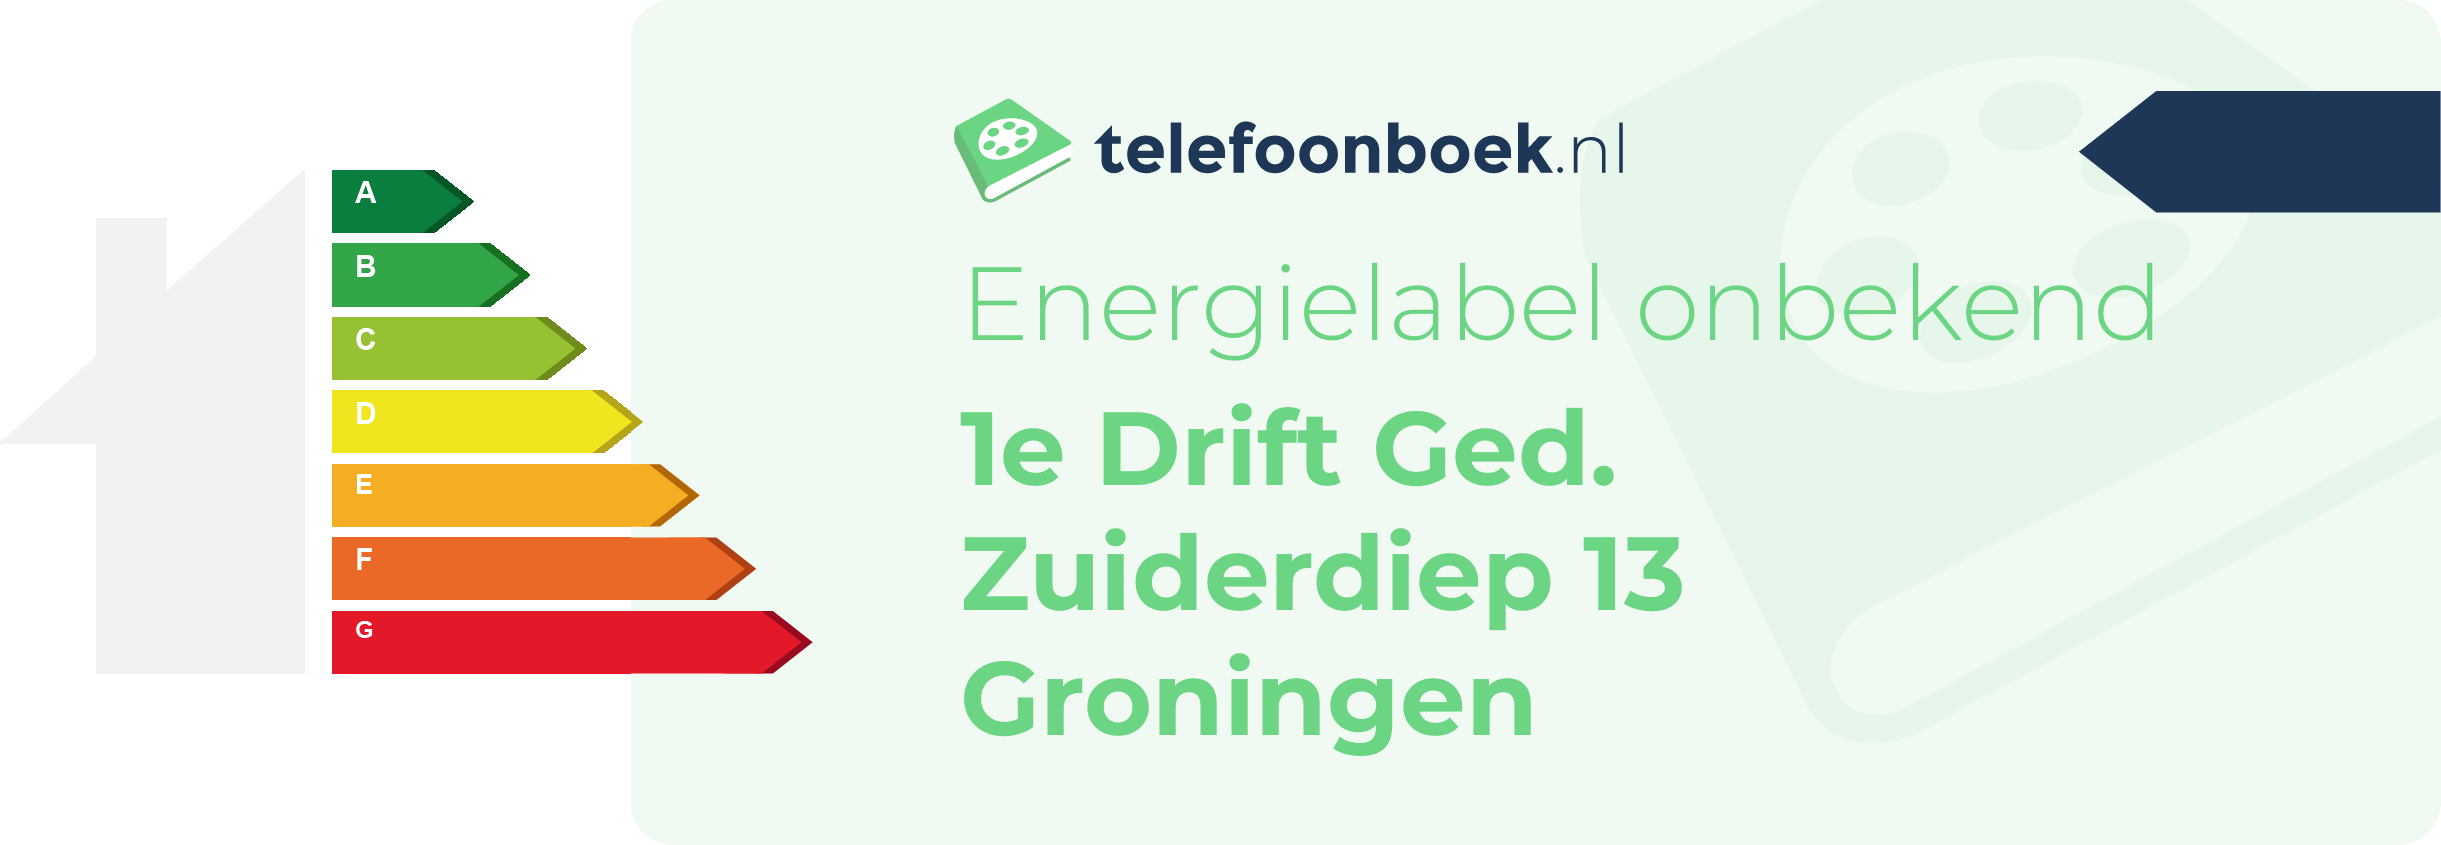 Energielabel 1e Drift Ged. Zuiderdiep 13 Groningen